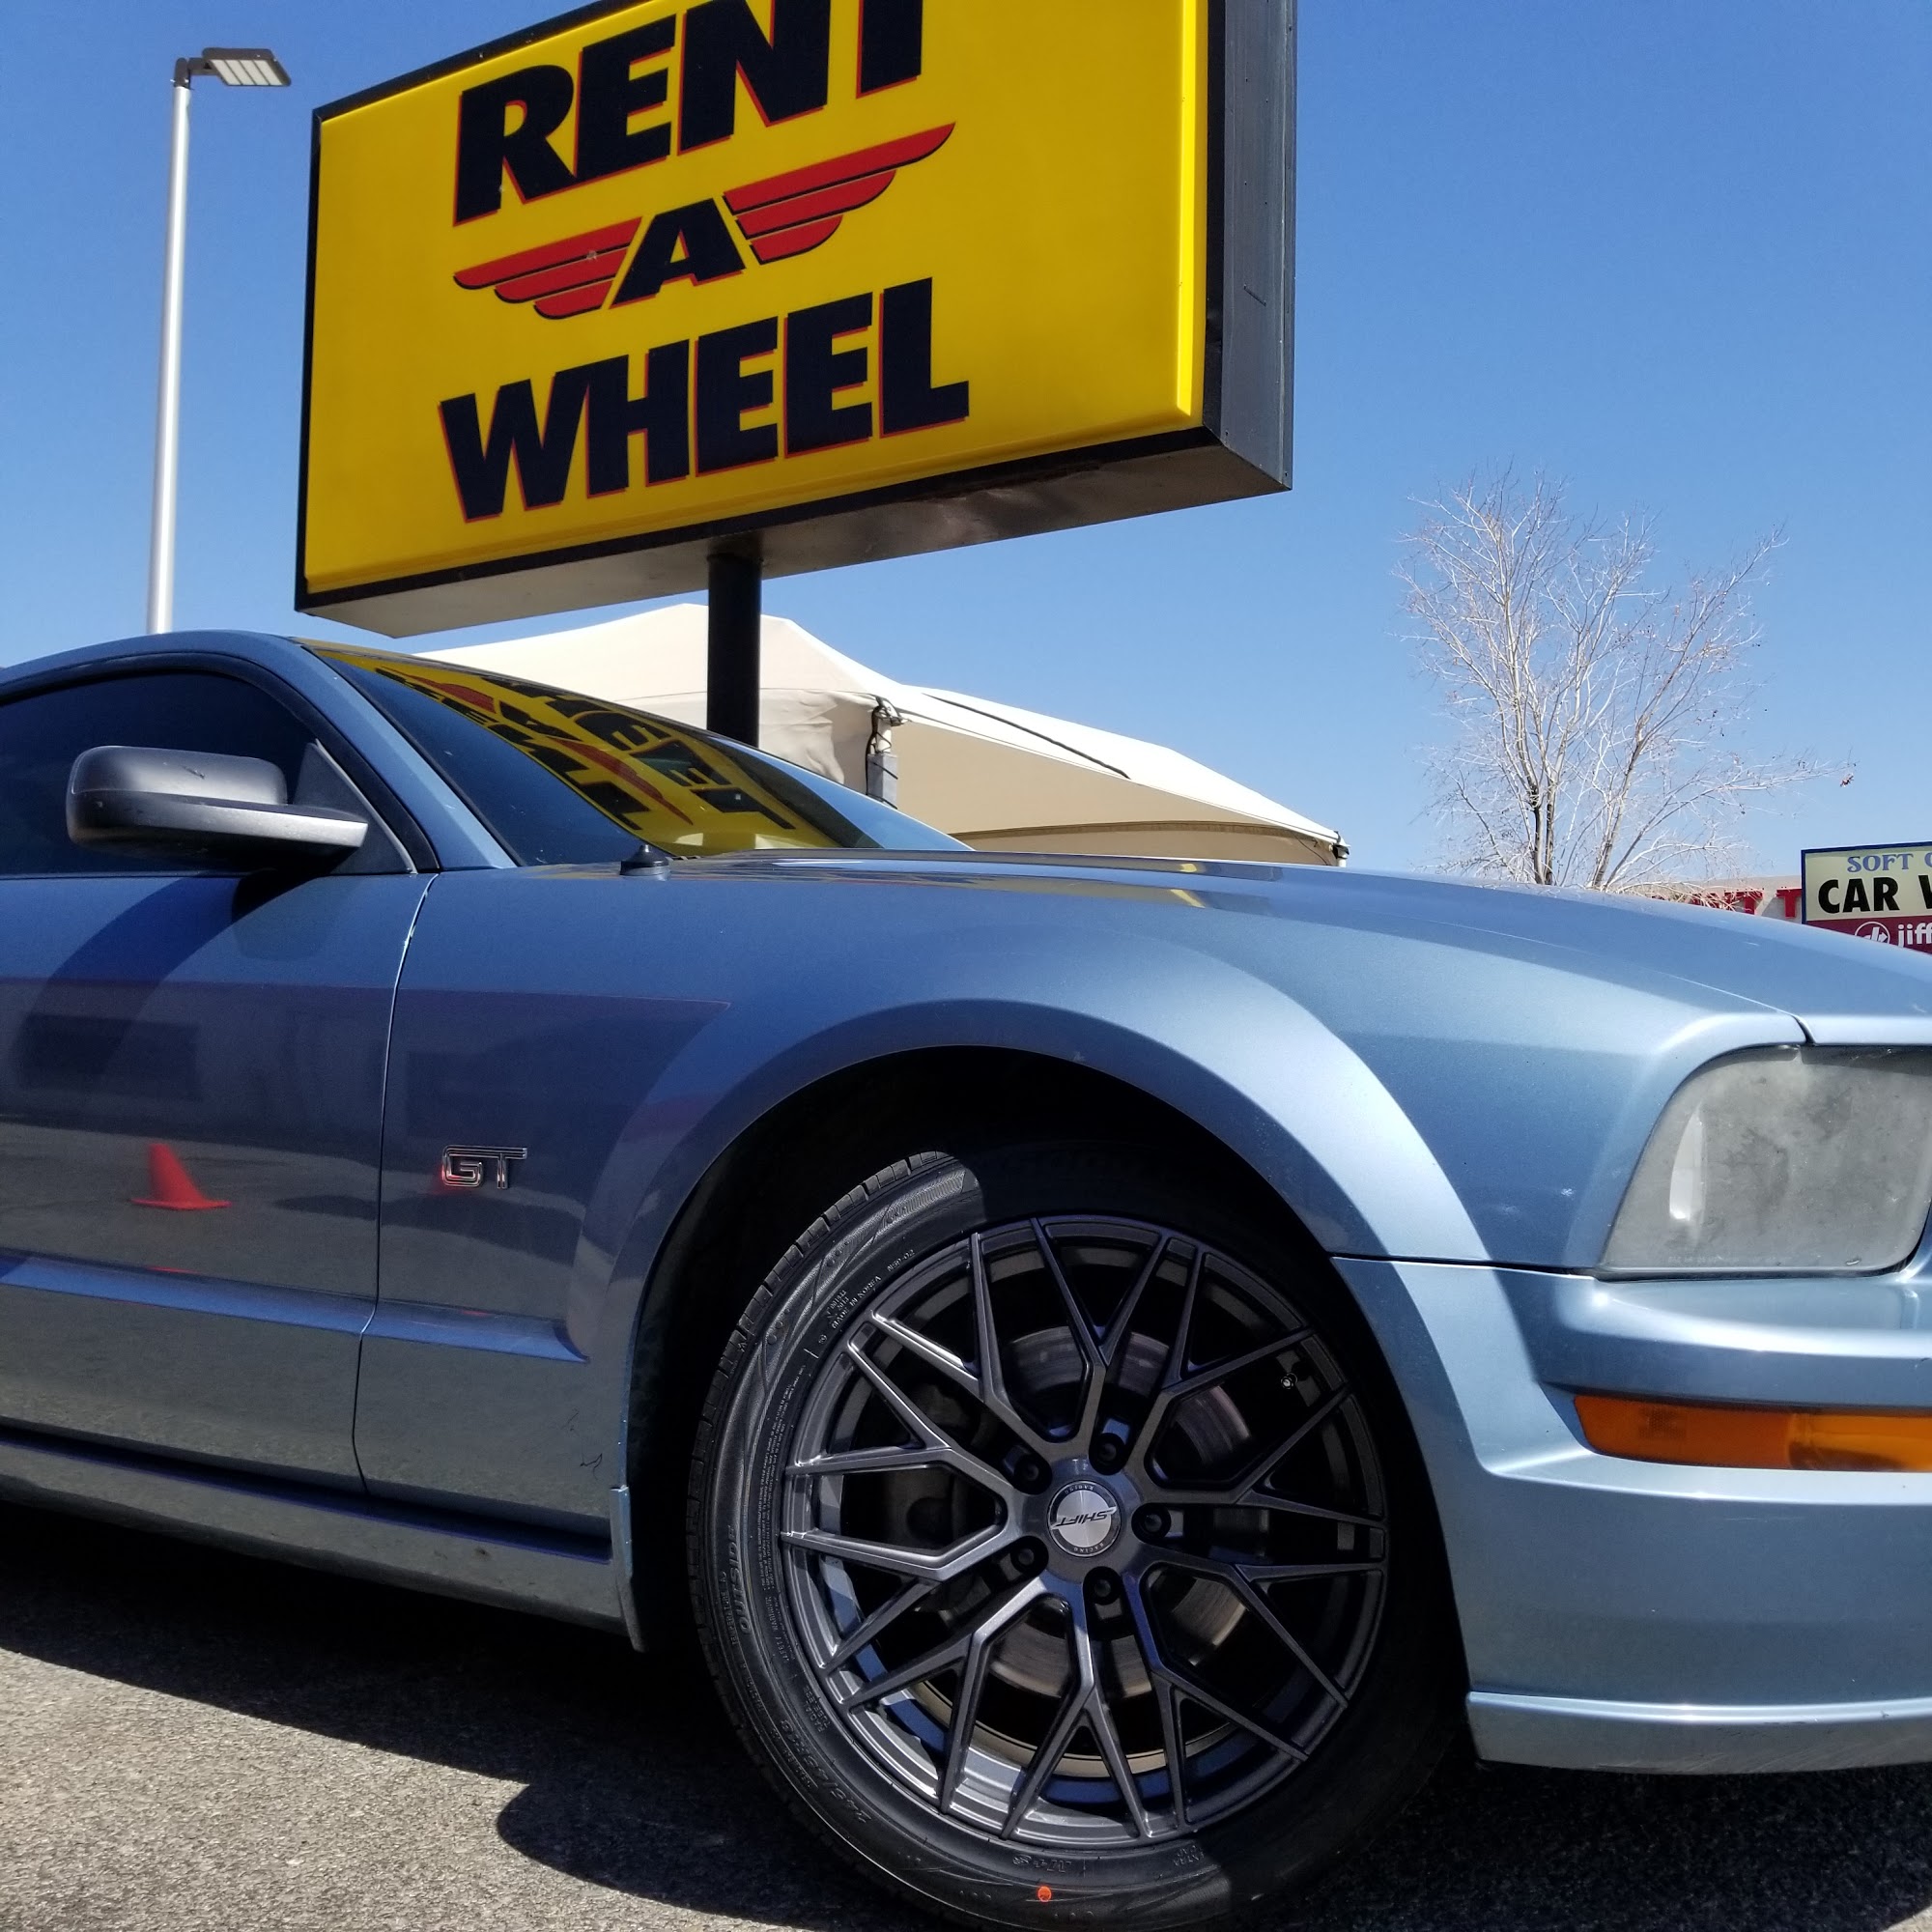 RAW Wheels & Tires